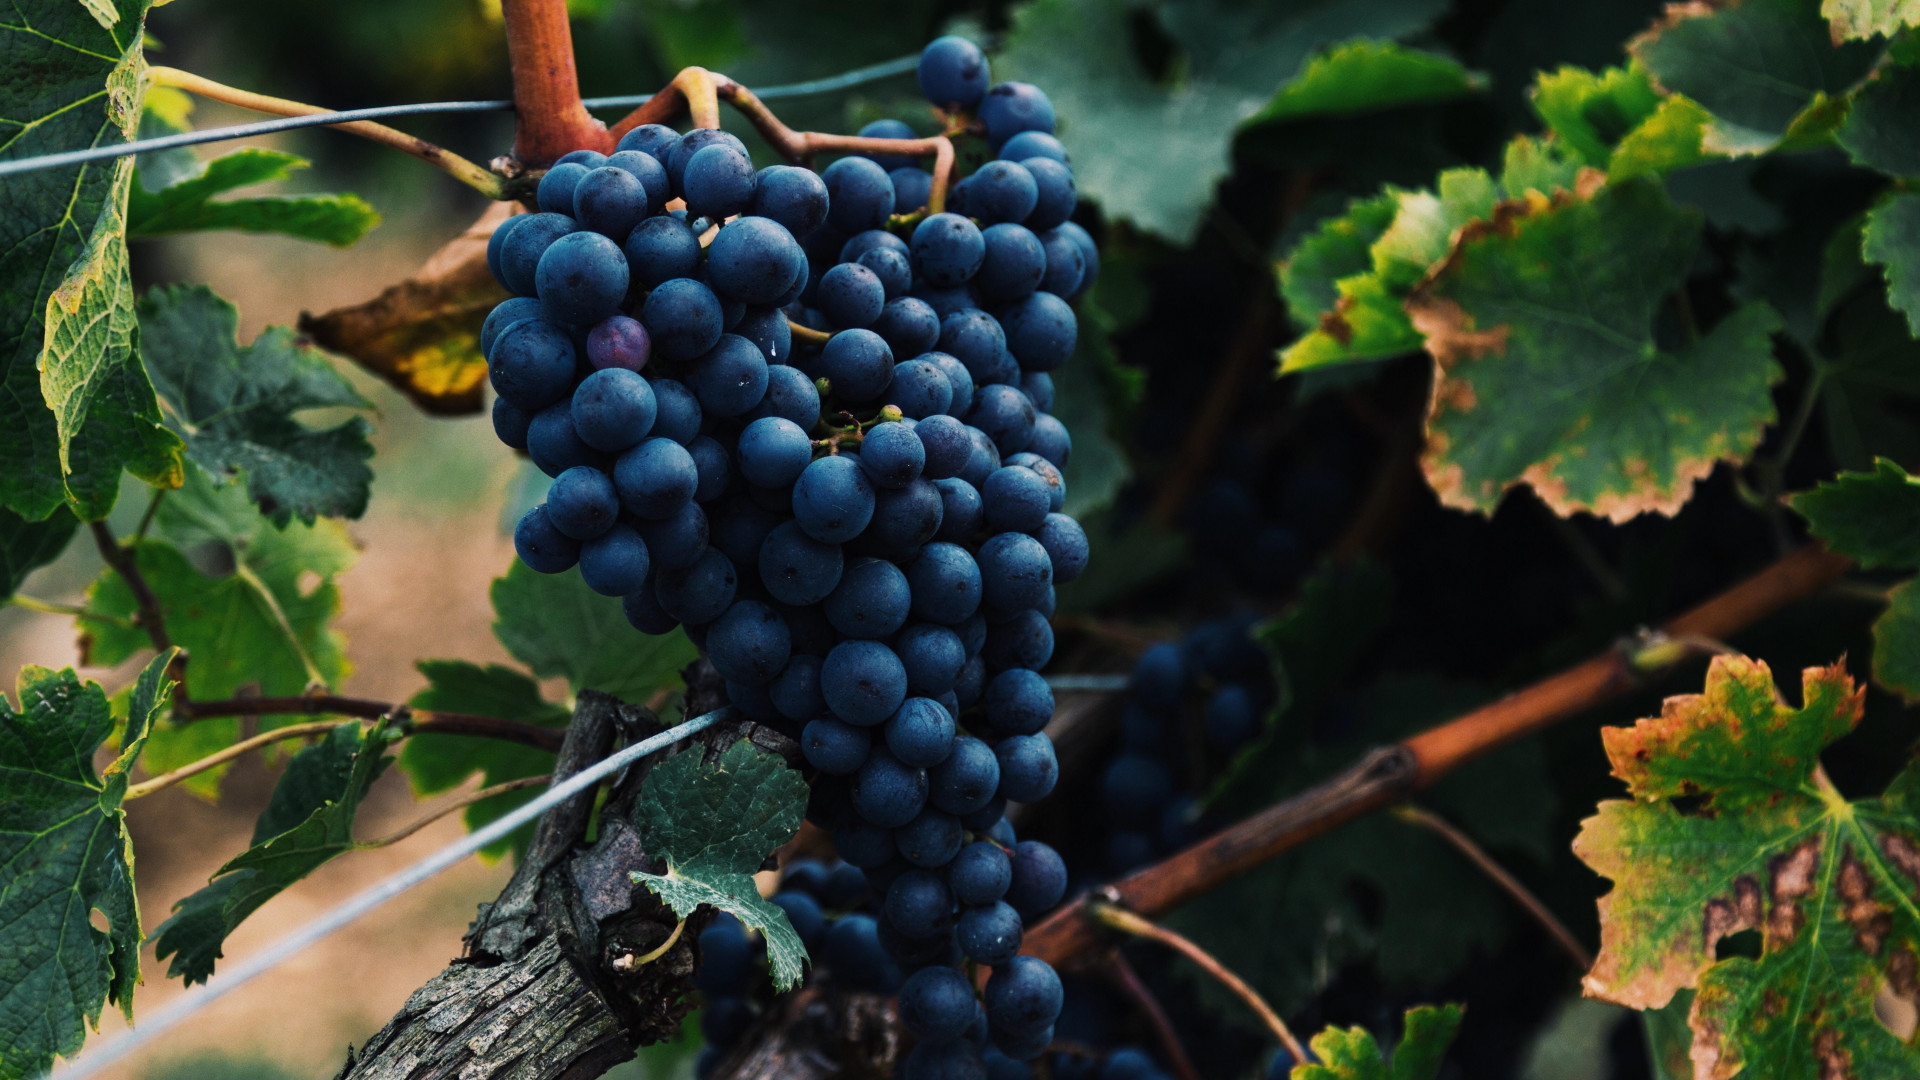 https://vinhoitaliano.com/wp-content/uploads/2021/09/1920x1080_grapes-berries-bunch-vine.jpg